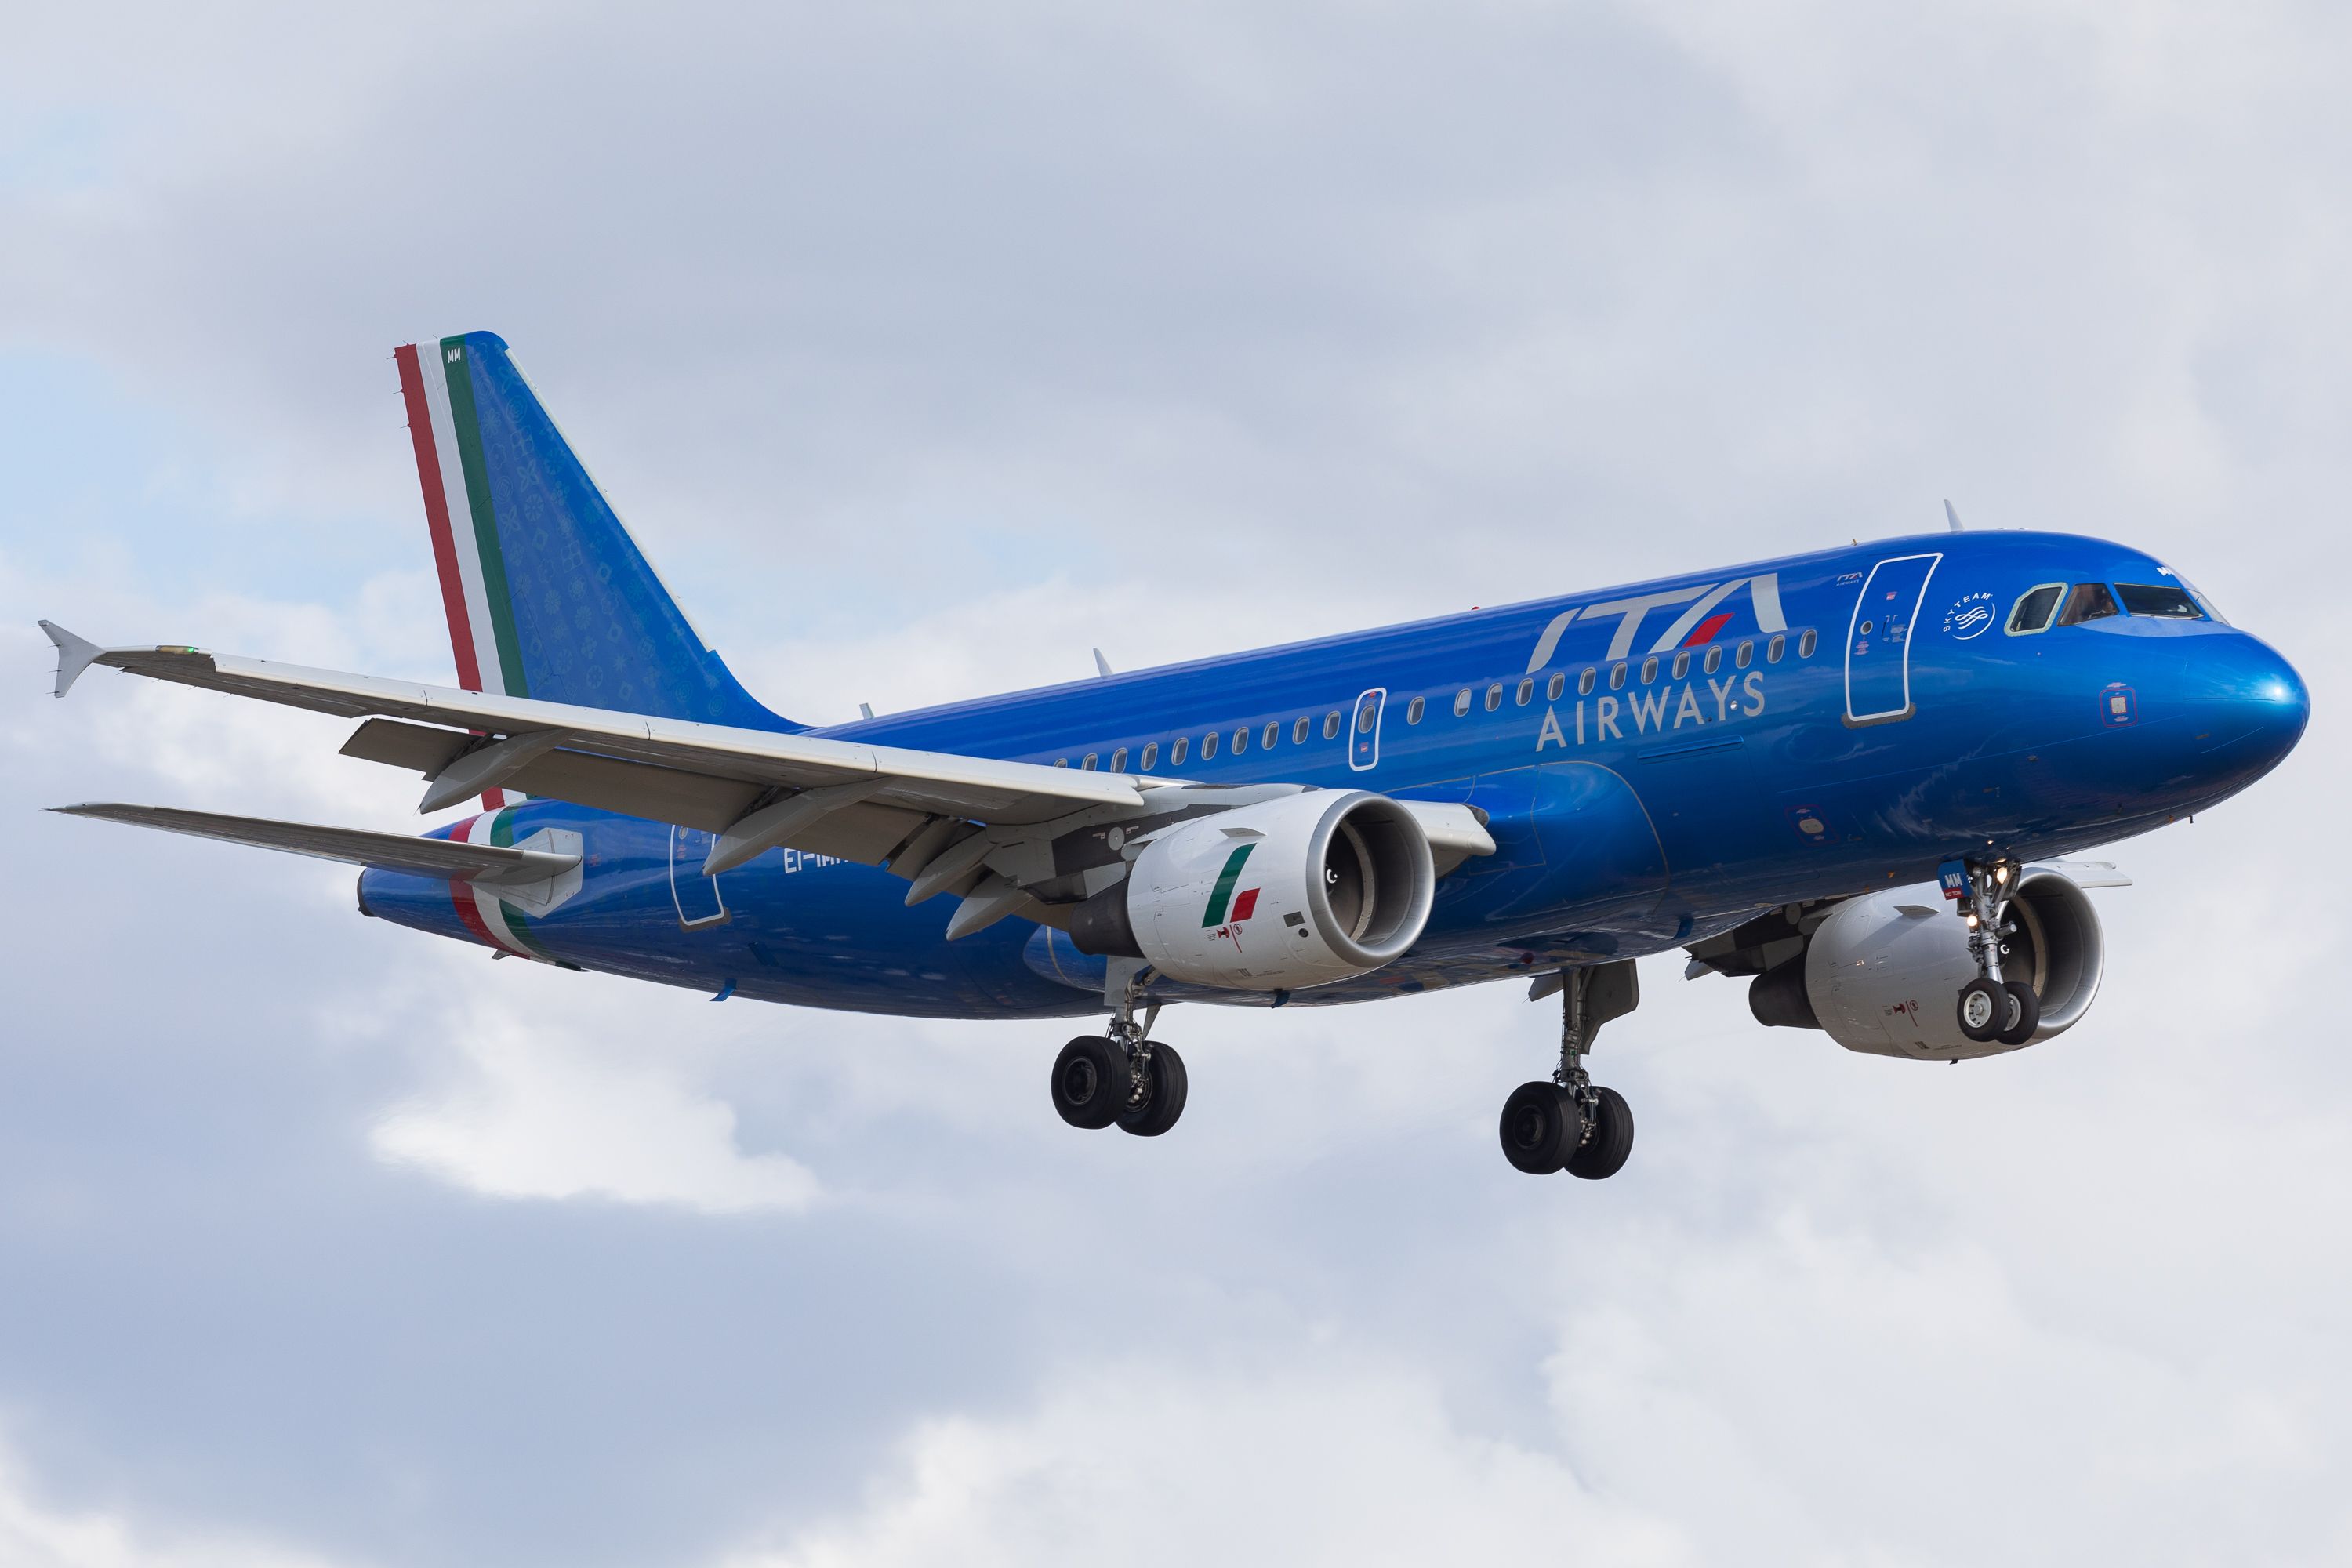 ITA Airways Airbus A319 coming in for landing